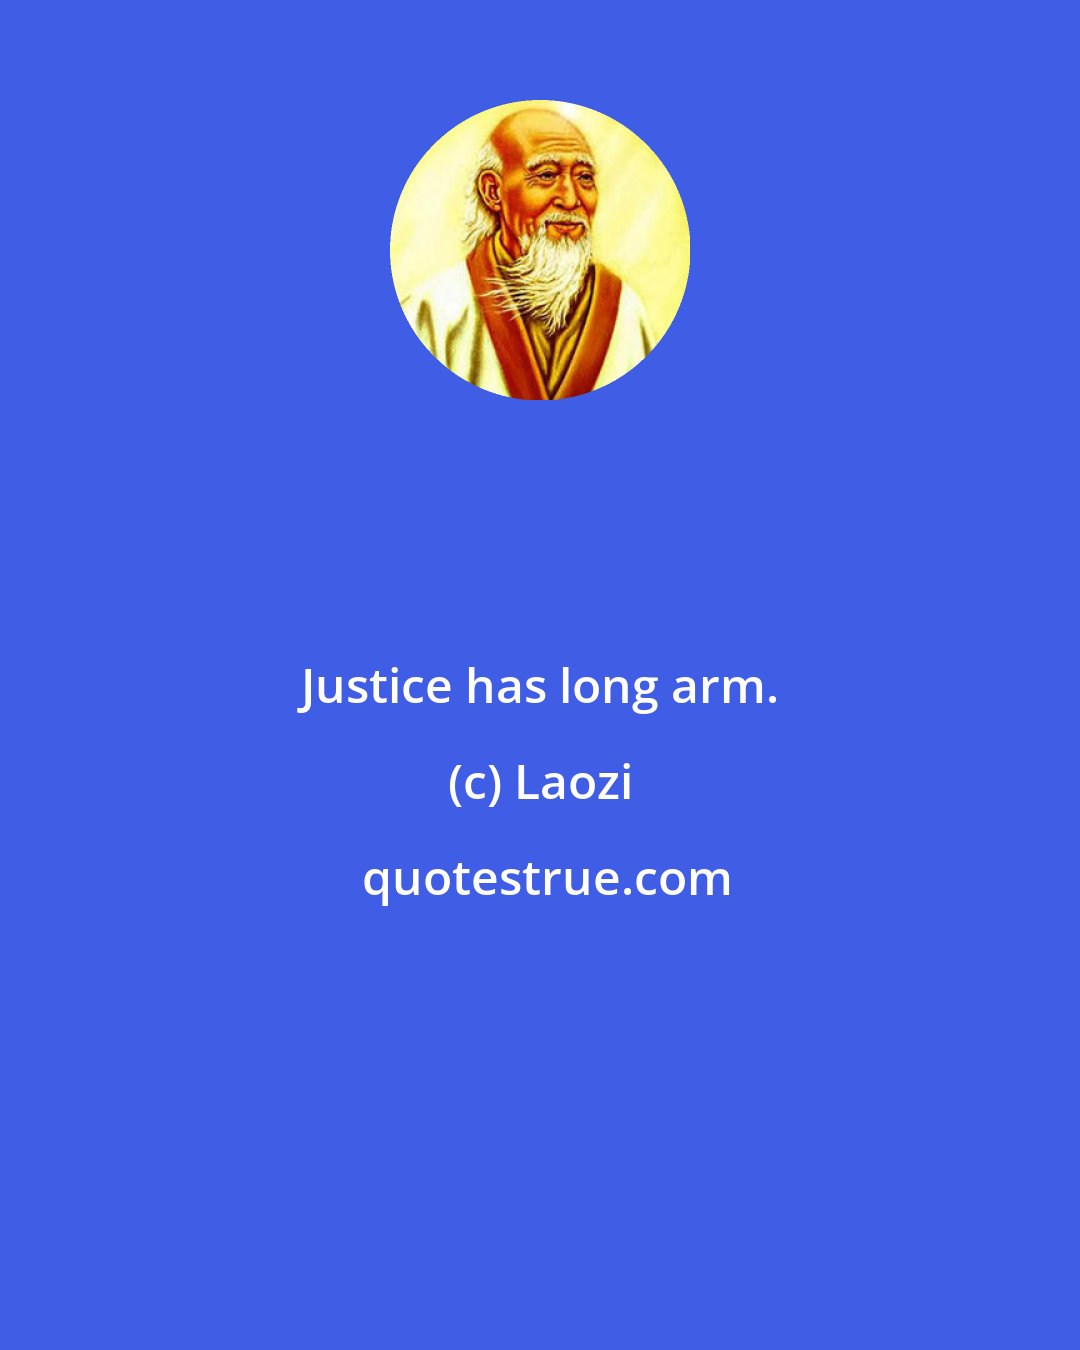 Laozi: Justice has long arm.